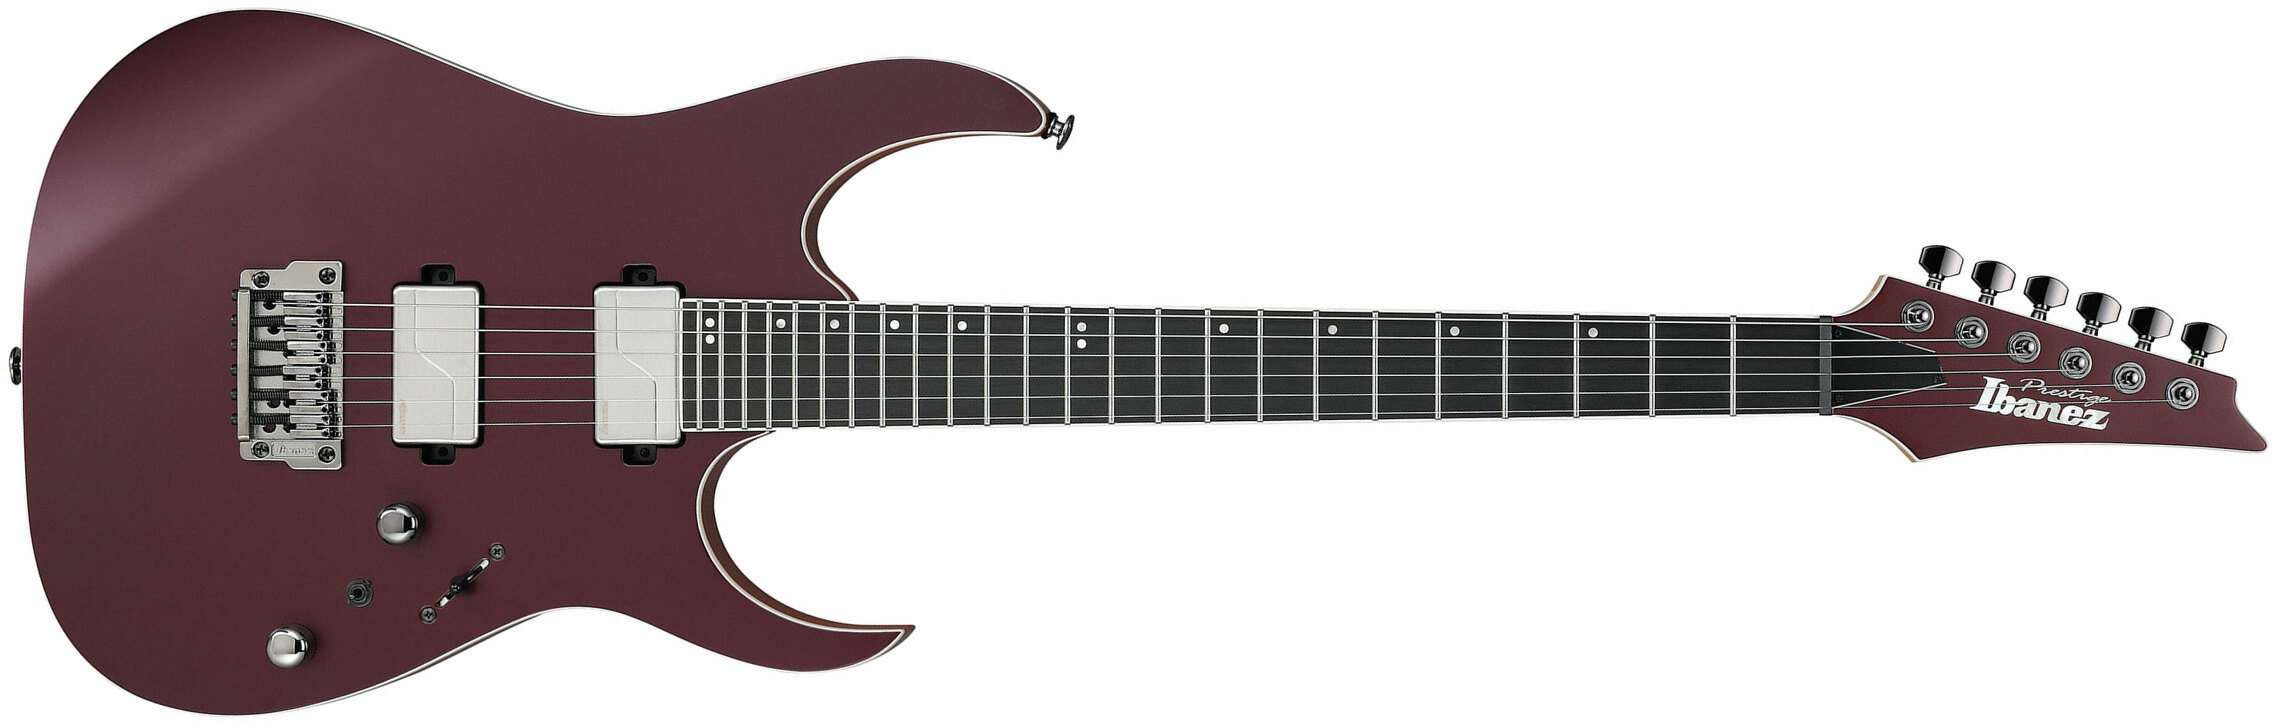 Ibanez Rg5121 Bcf Prestige Jap Hh Fishman Fluence Ht Eb - Burgundy Metallic Flat - Str shape electric guitar - Main picture